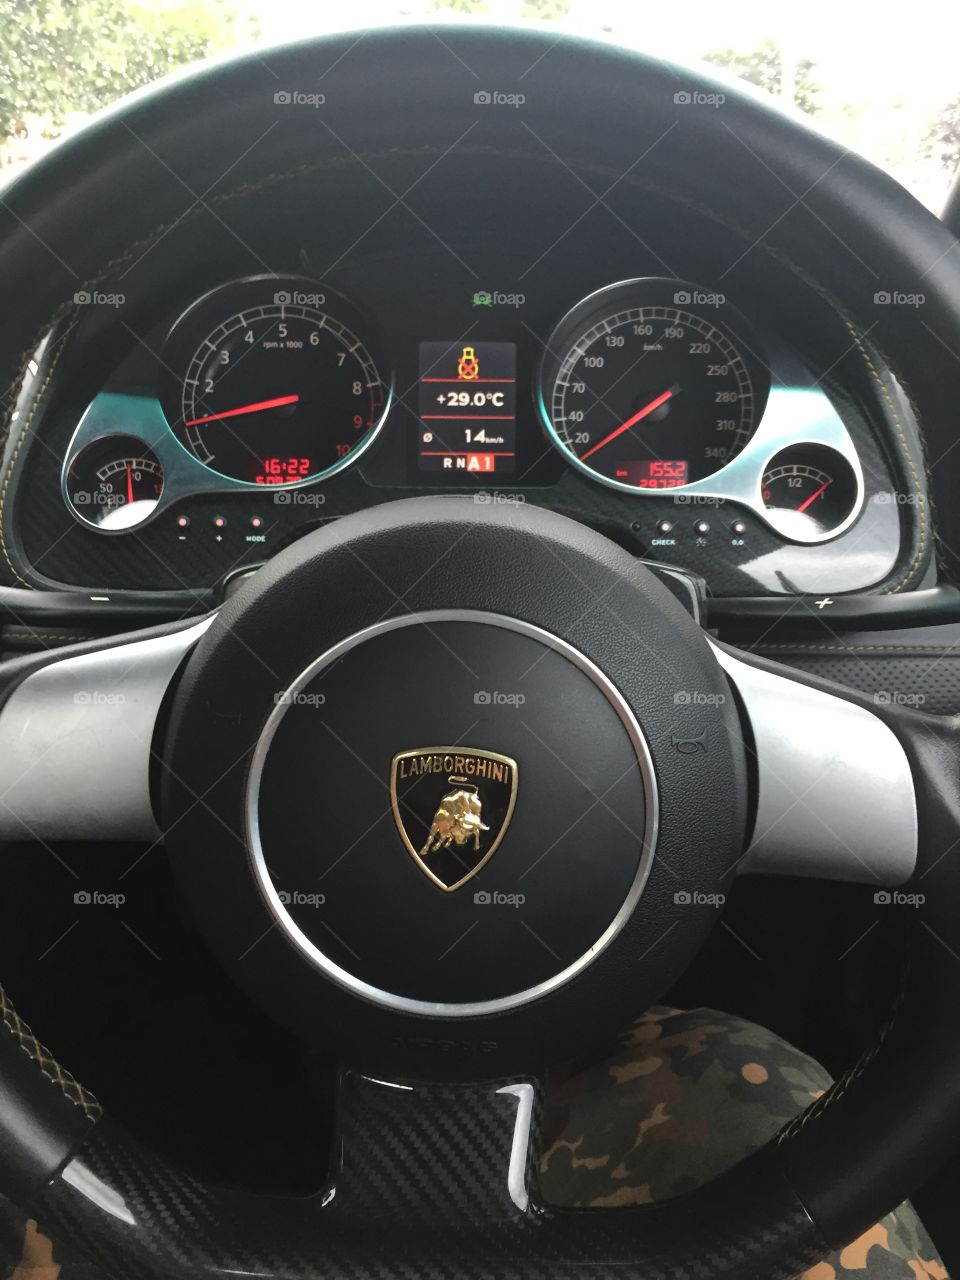 Lamborghini ride